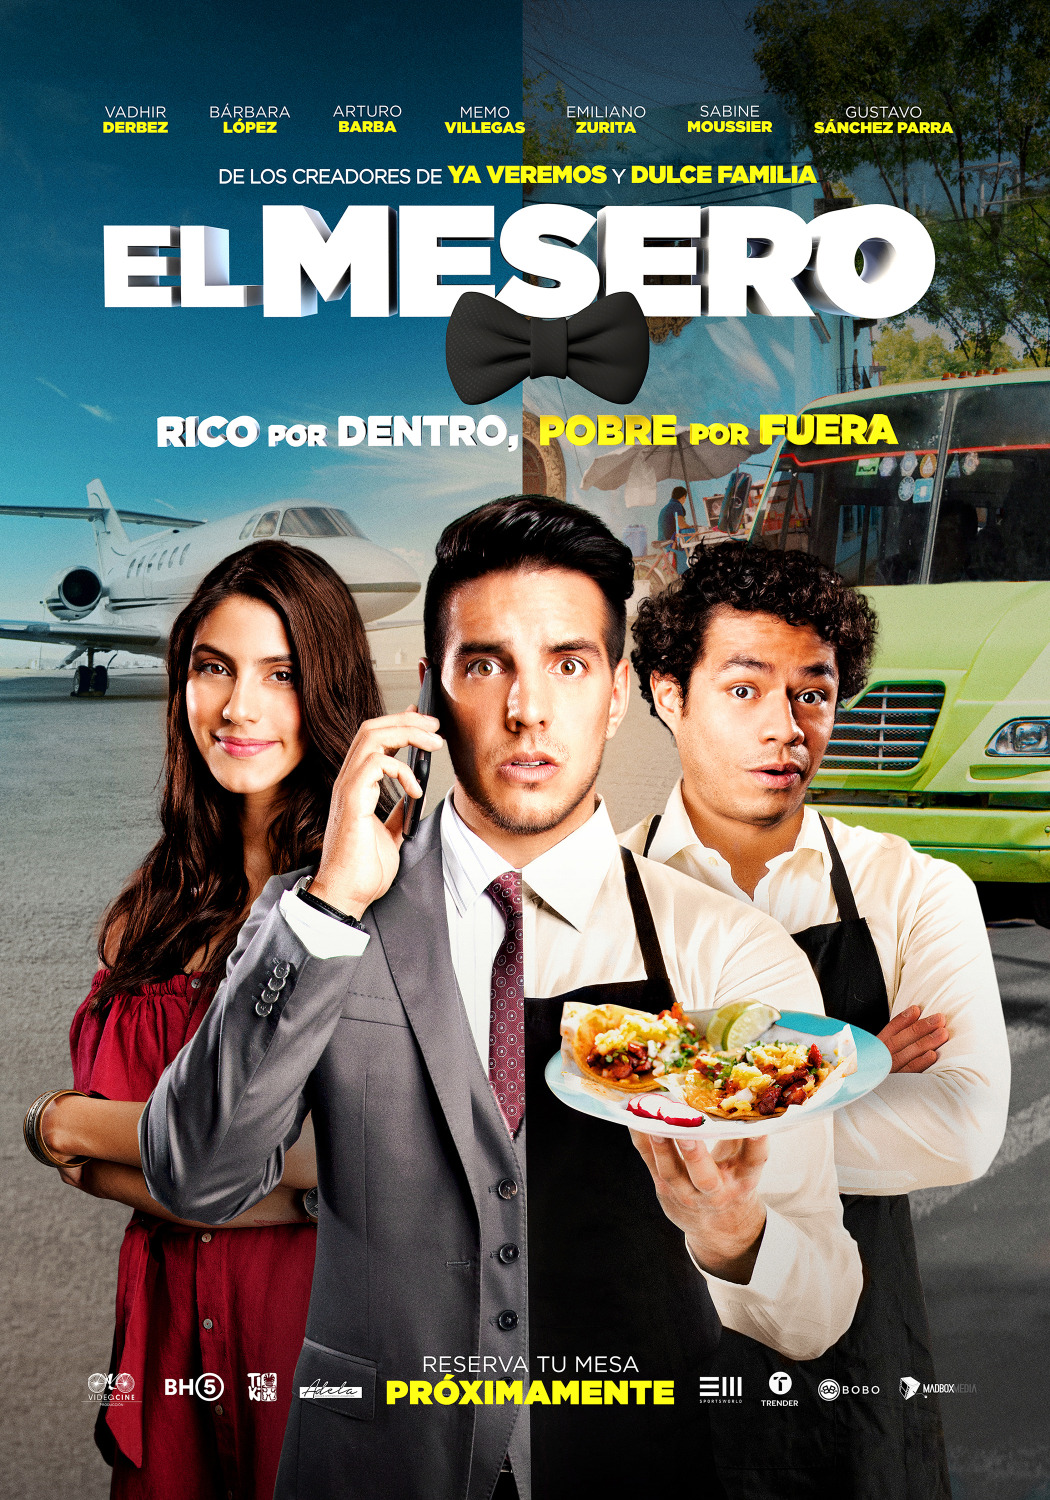 Extra Large Movie Poster Image for El mesero 